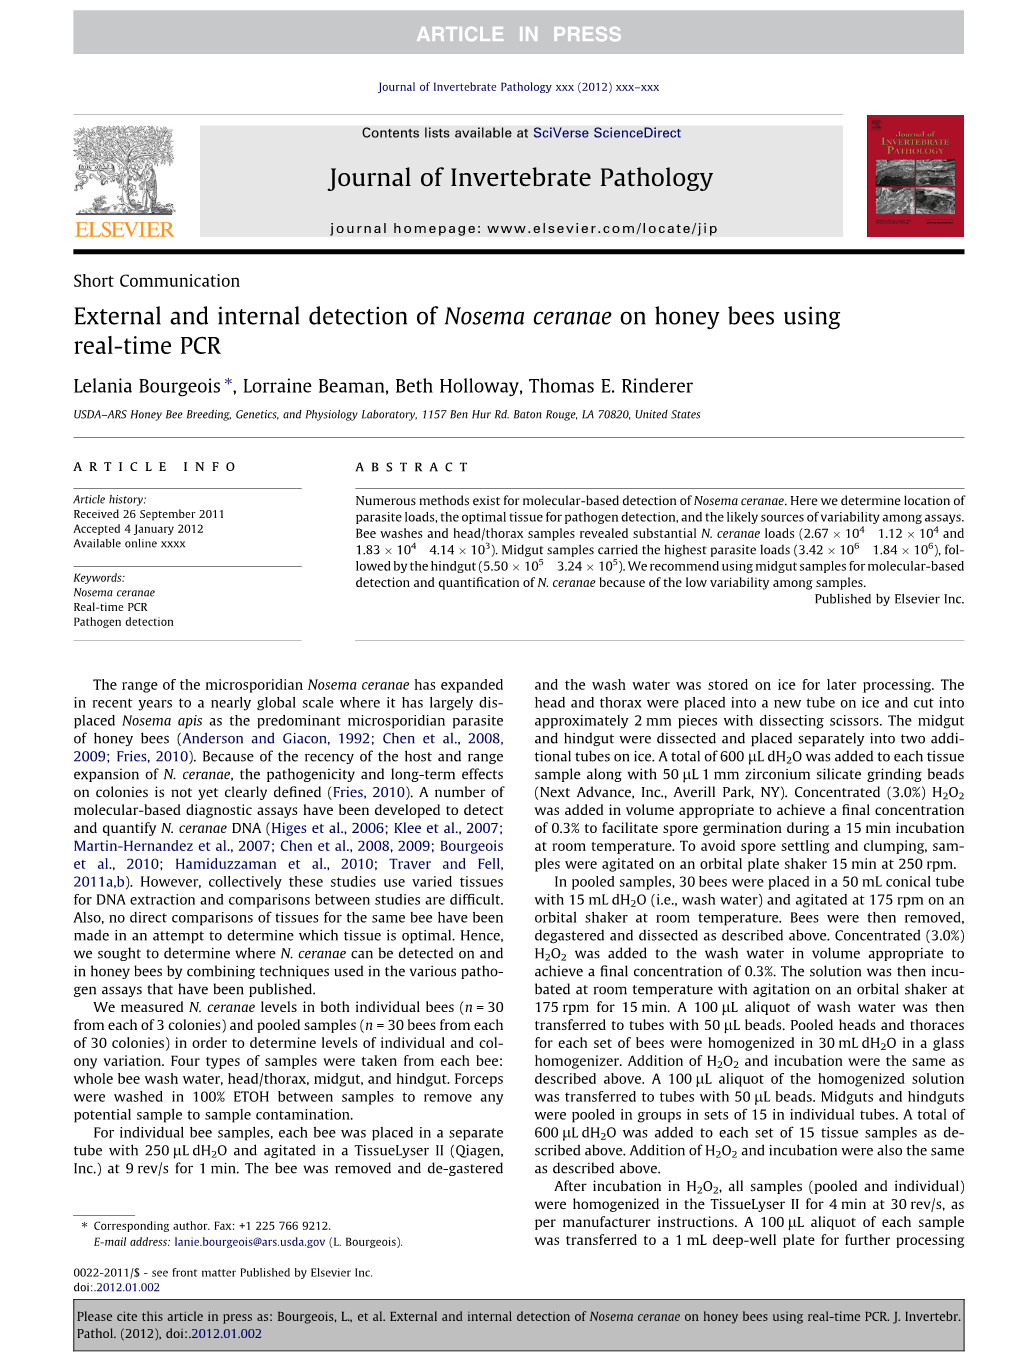 External and Internal Detection of Nosema Ceranae on Honey Bees Using Real-Time PCR ⇑ Lelania Bourgeois , Lorraine Beaman, Beth Holloway, Thomas E